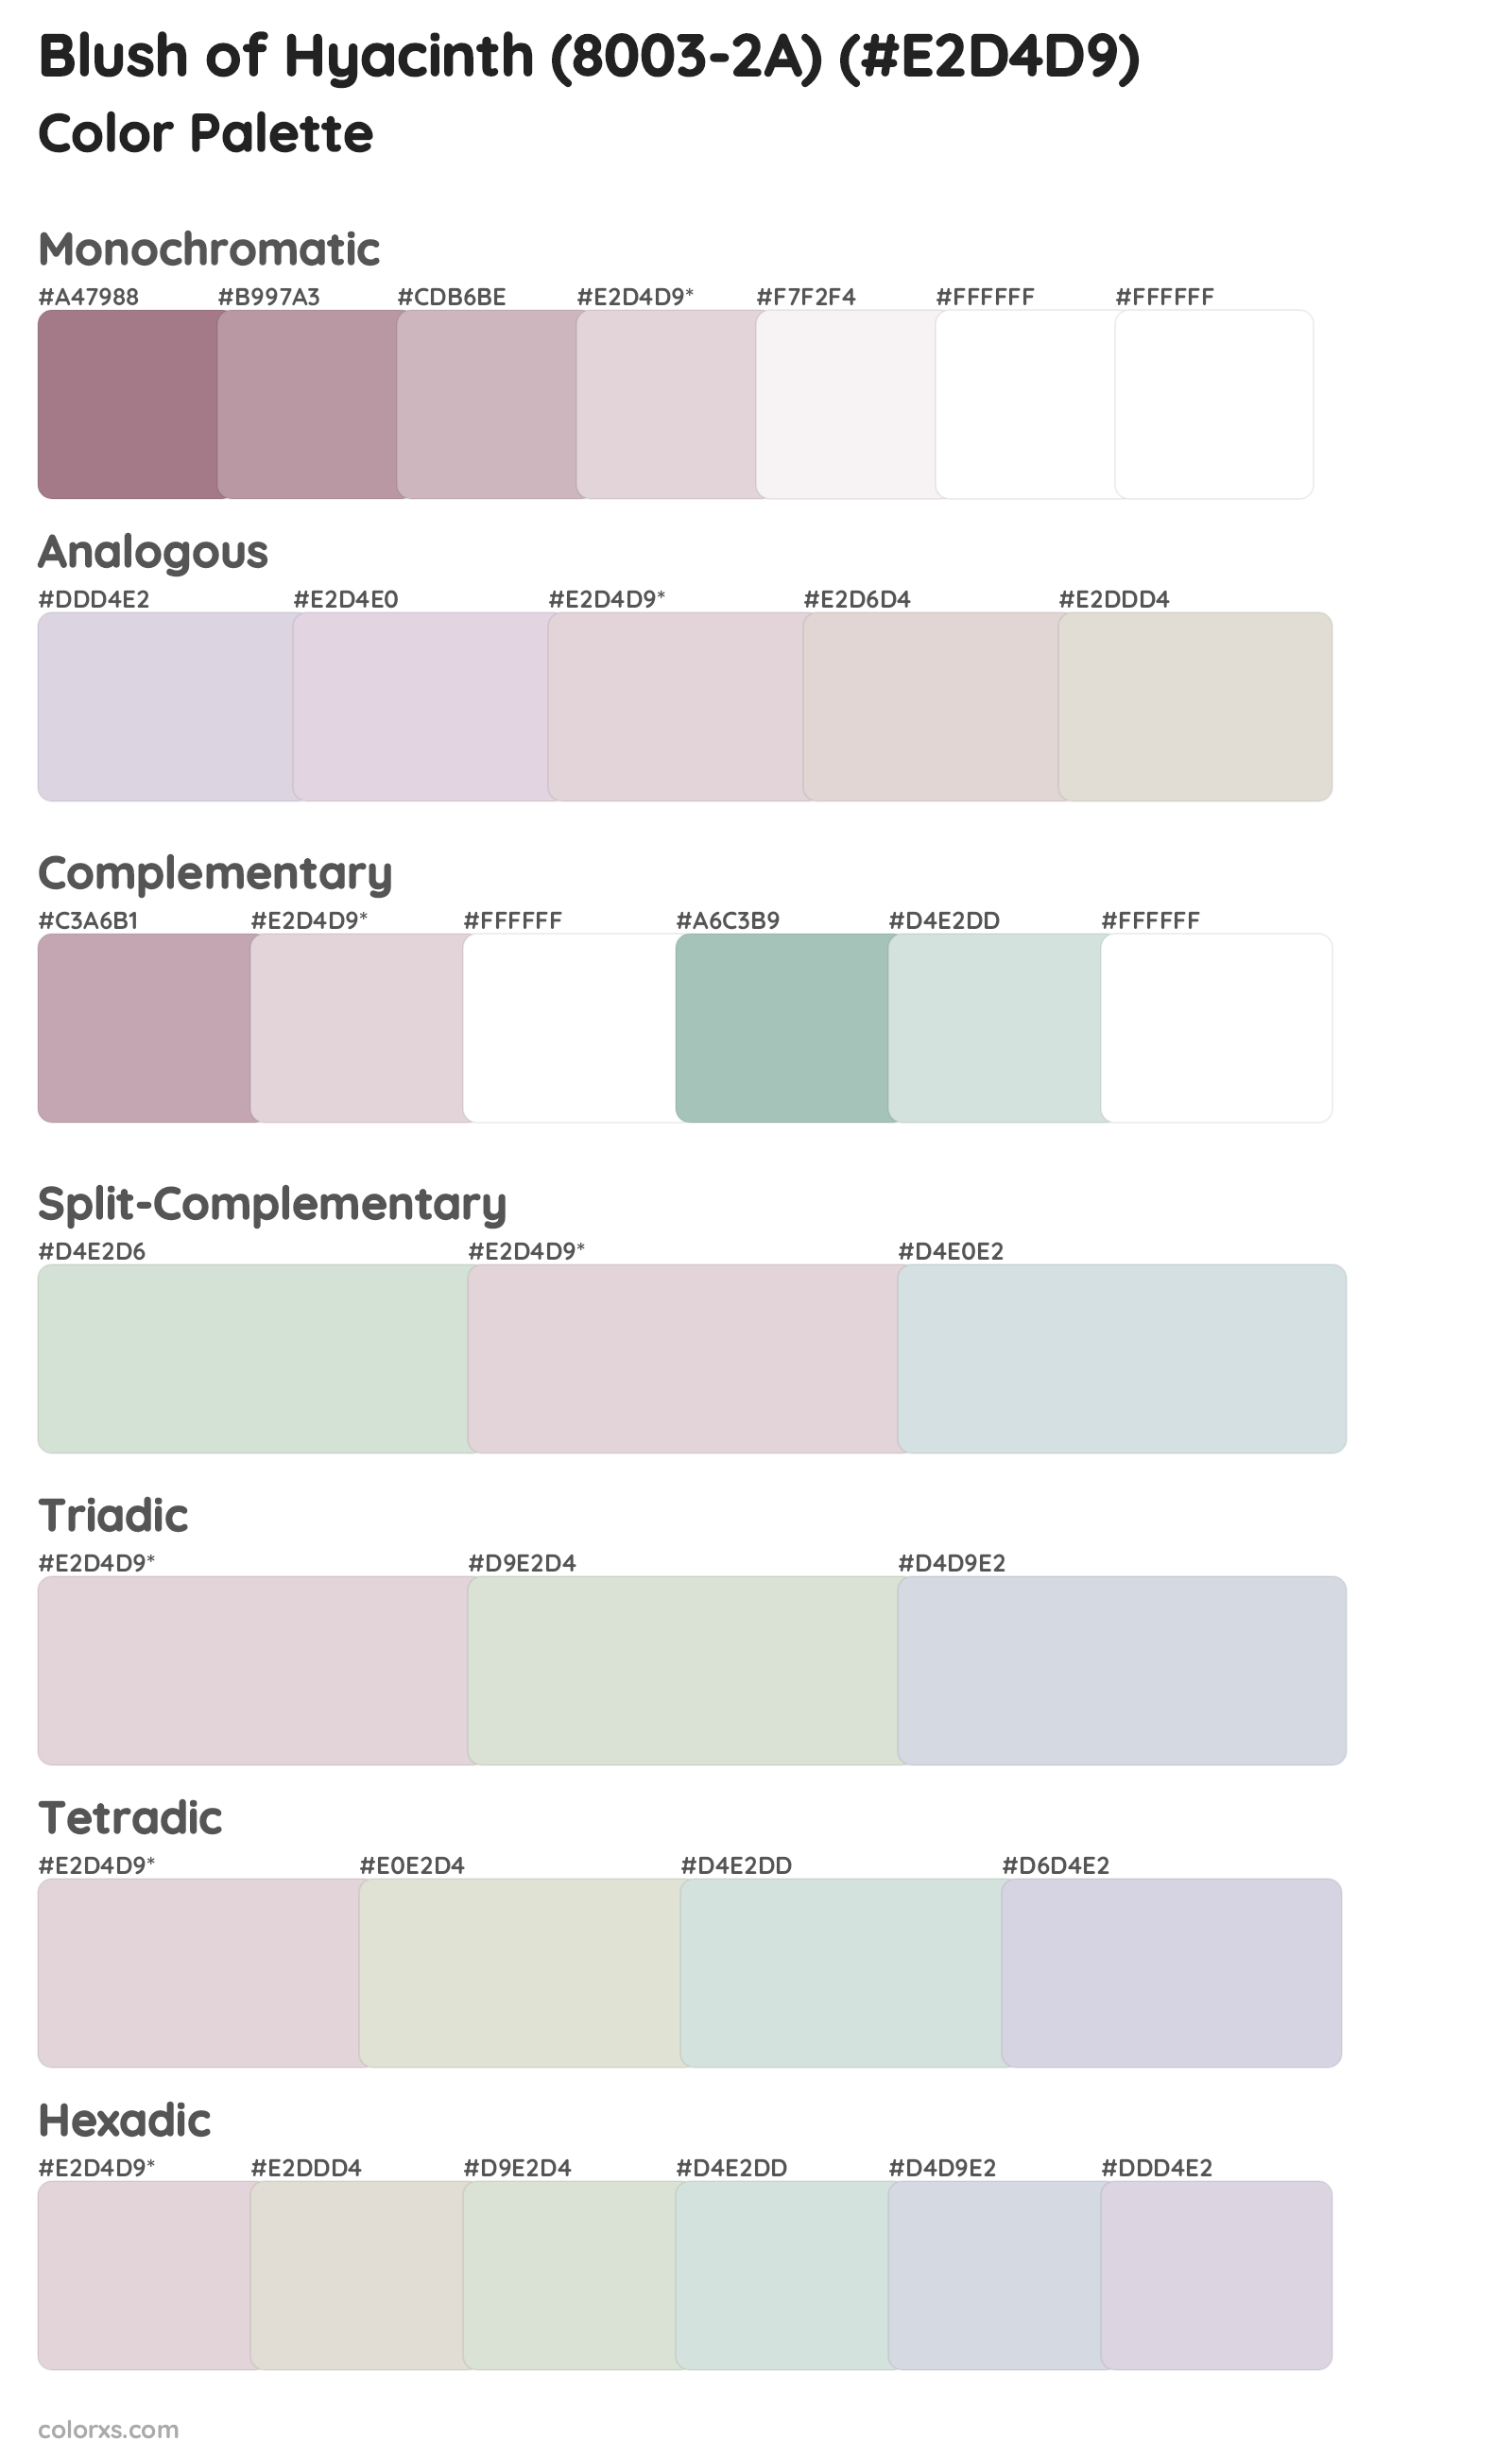 Blush of Hyacinth (8003-2A) Color Scheme Palettes